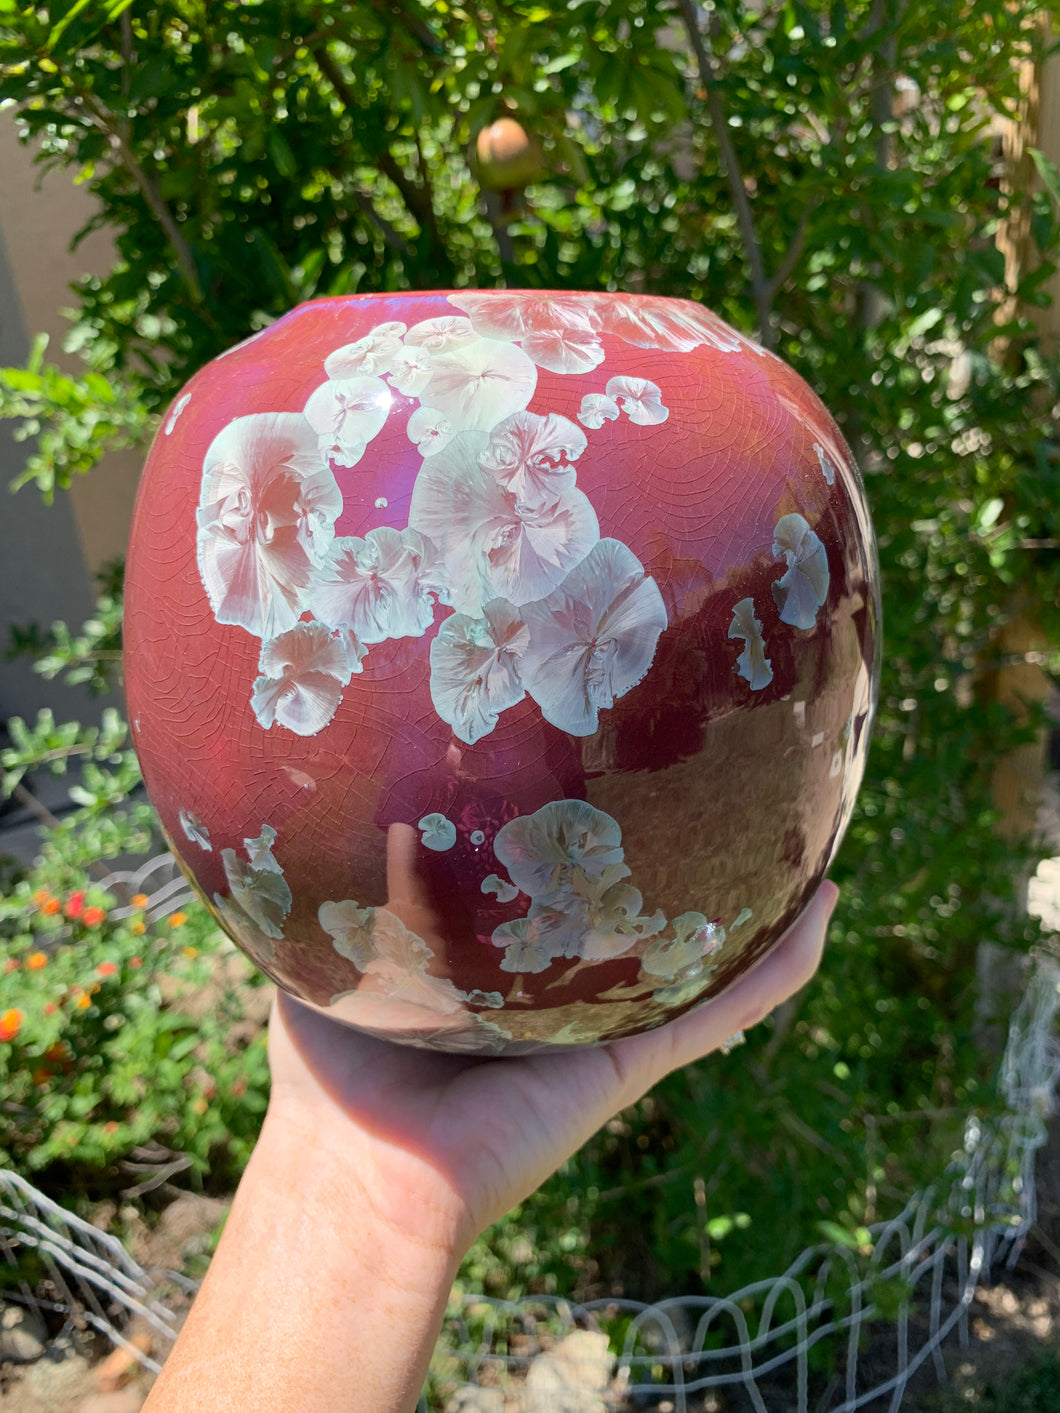 Wheel Thrown 'Globe' Vase